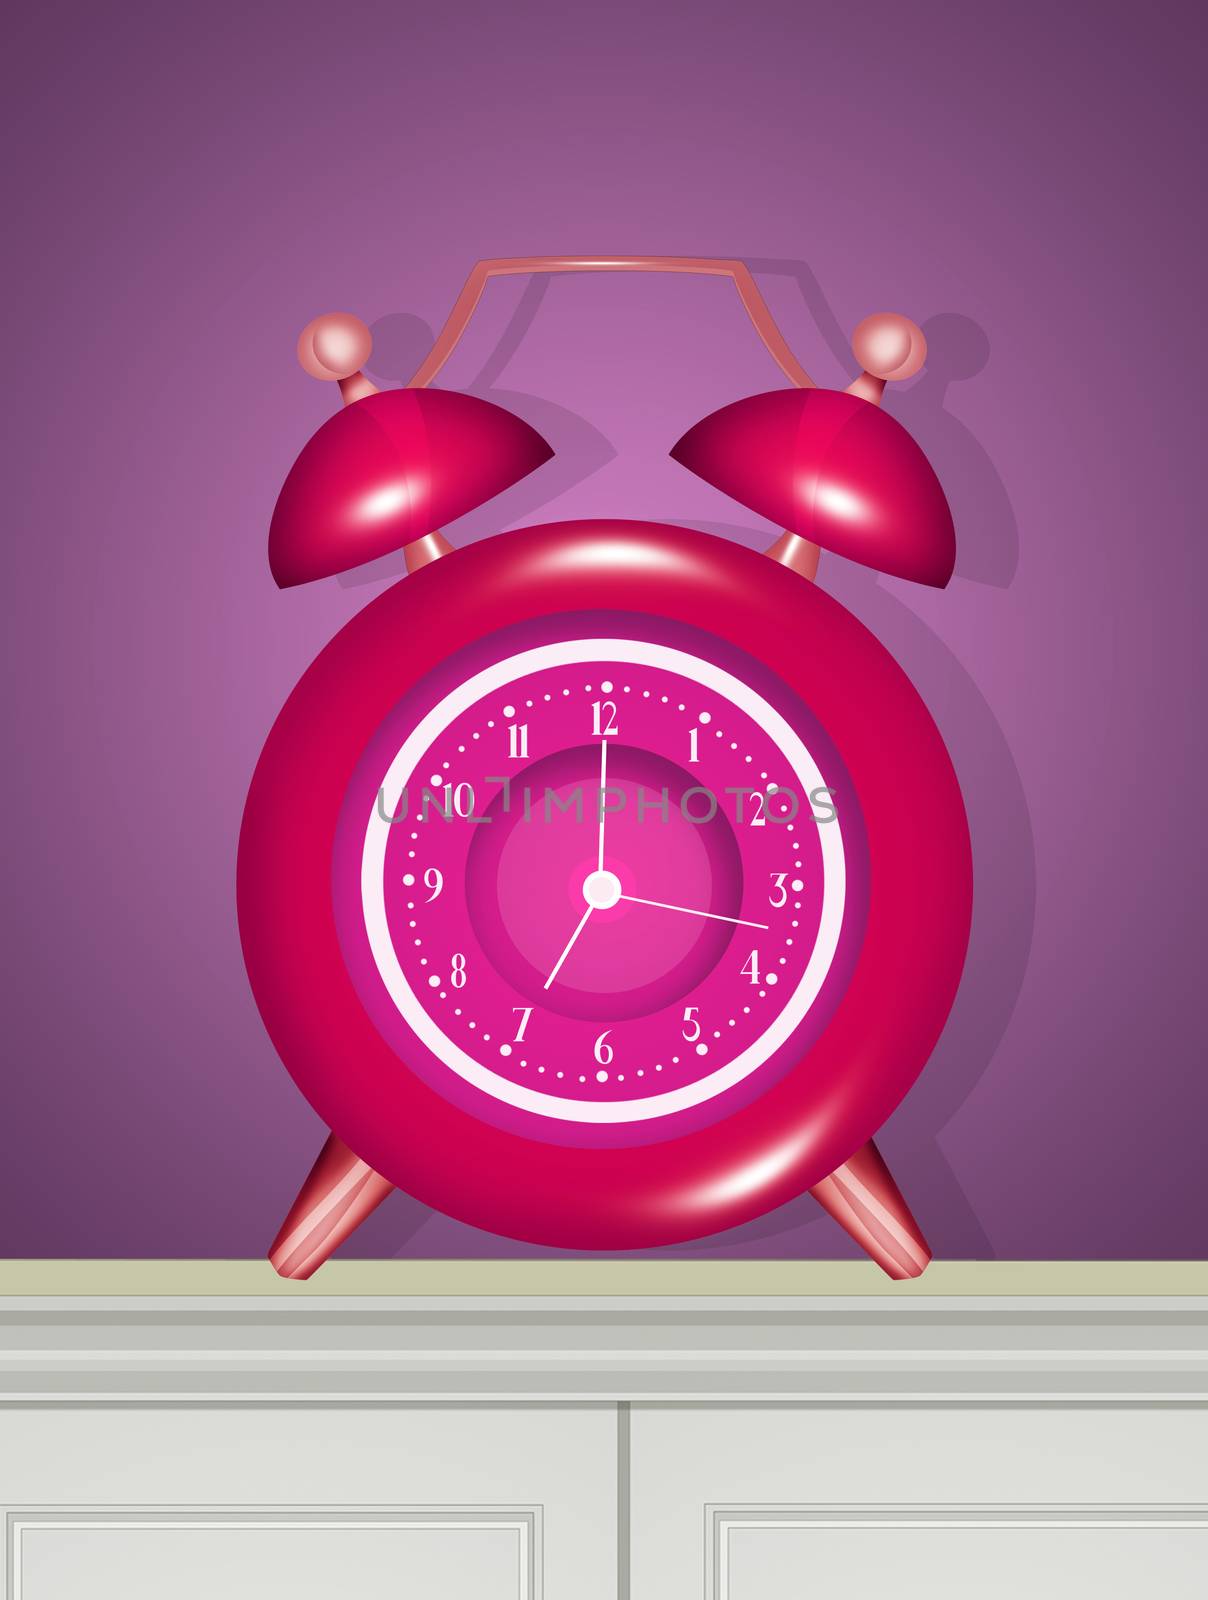 illustration of alarm clock by adrenalina